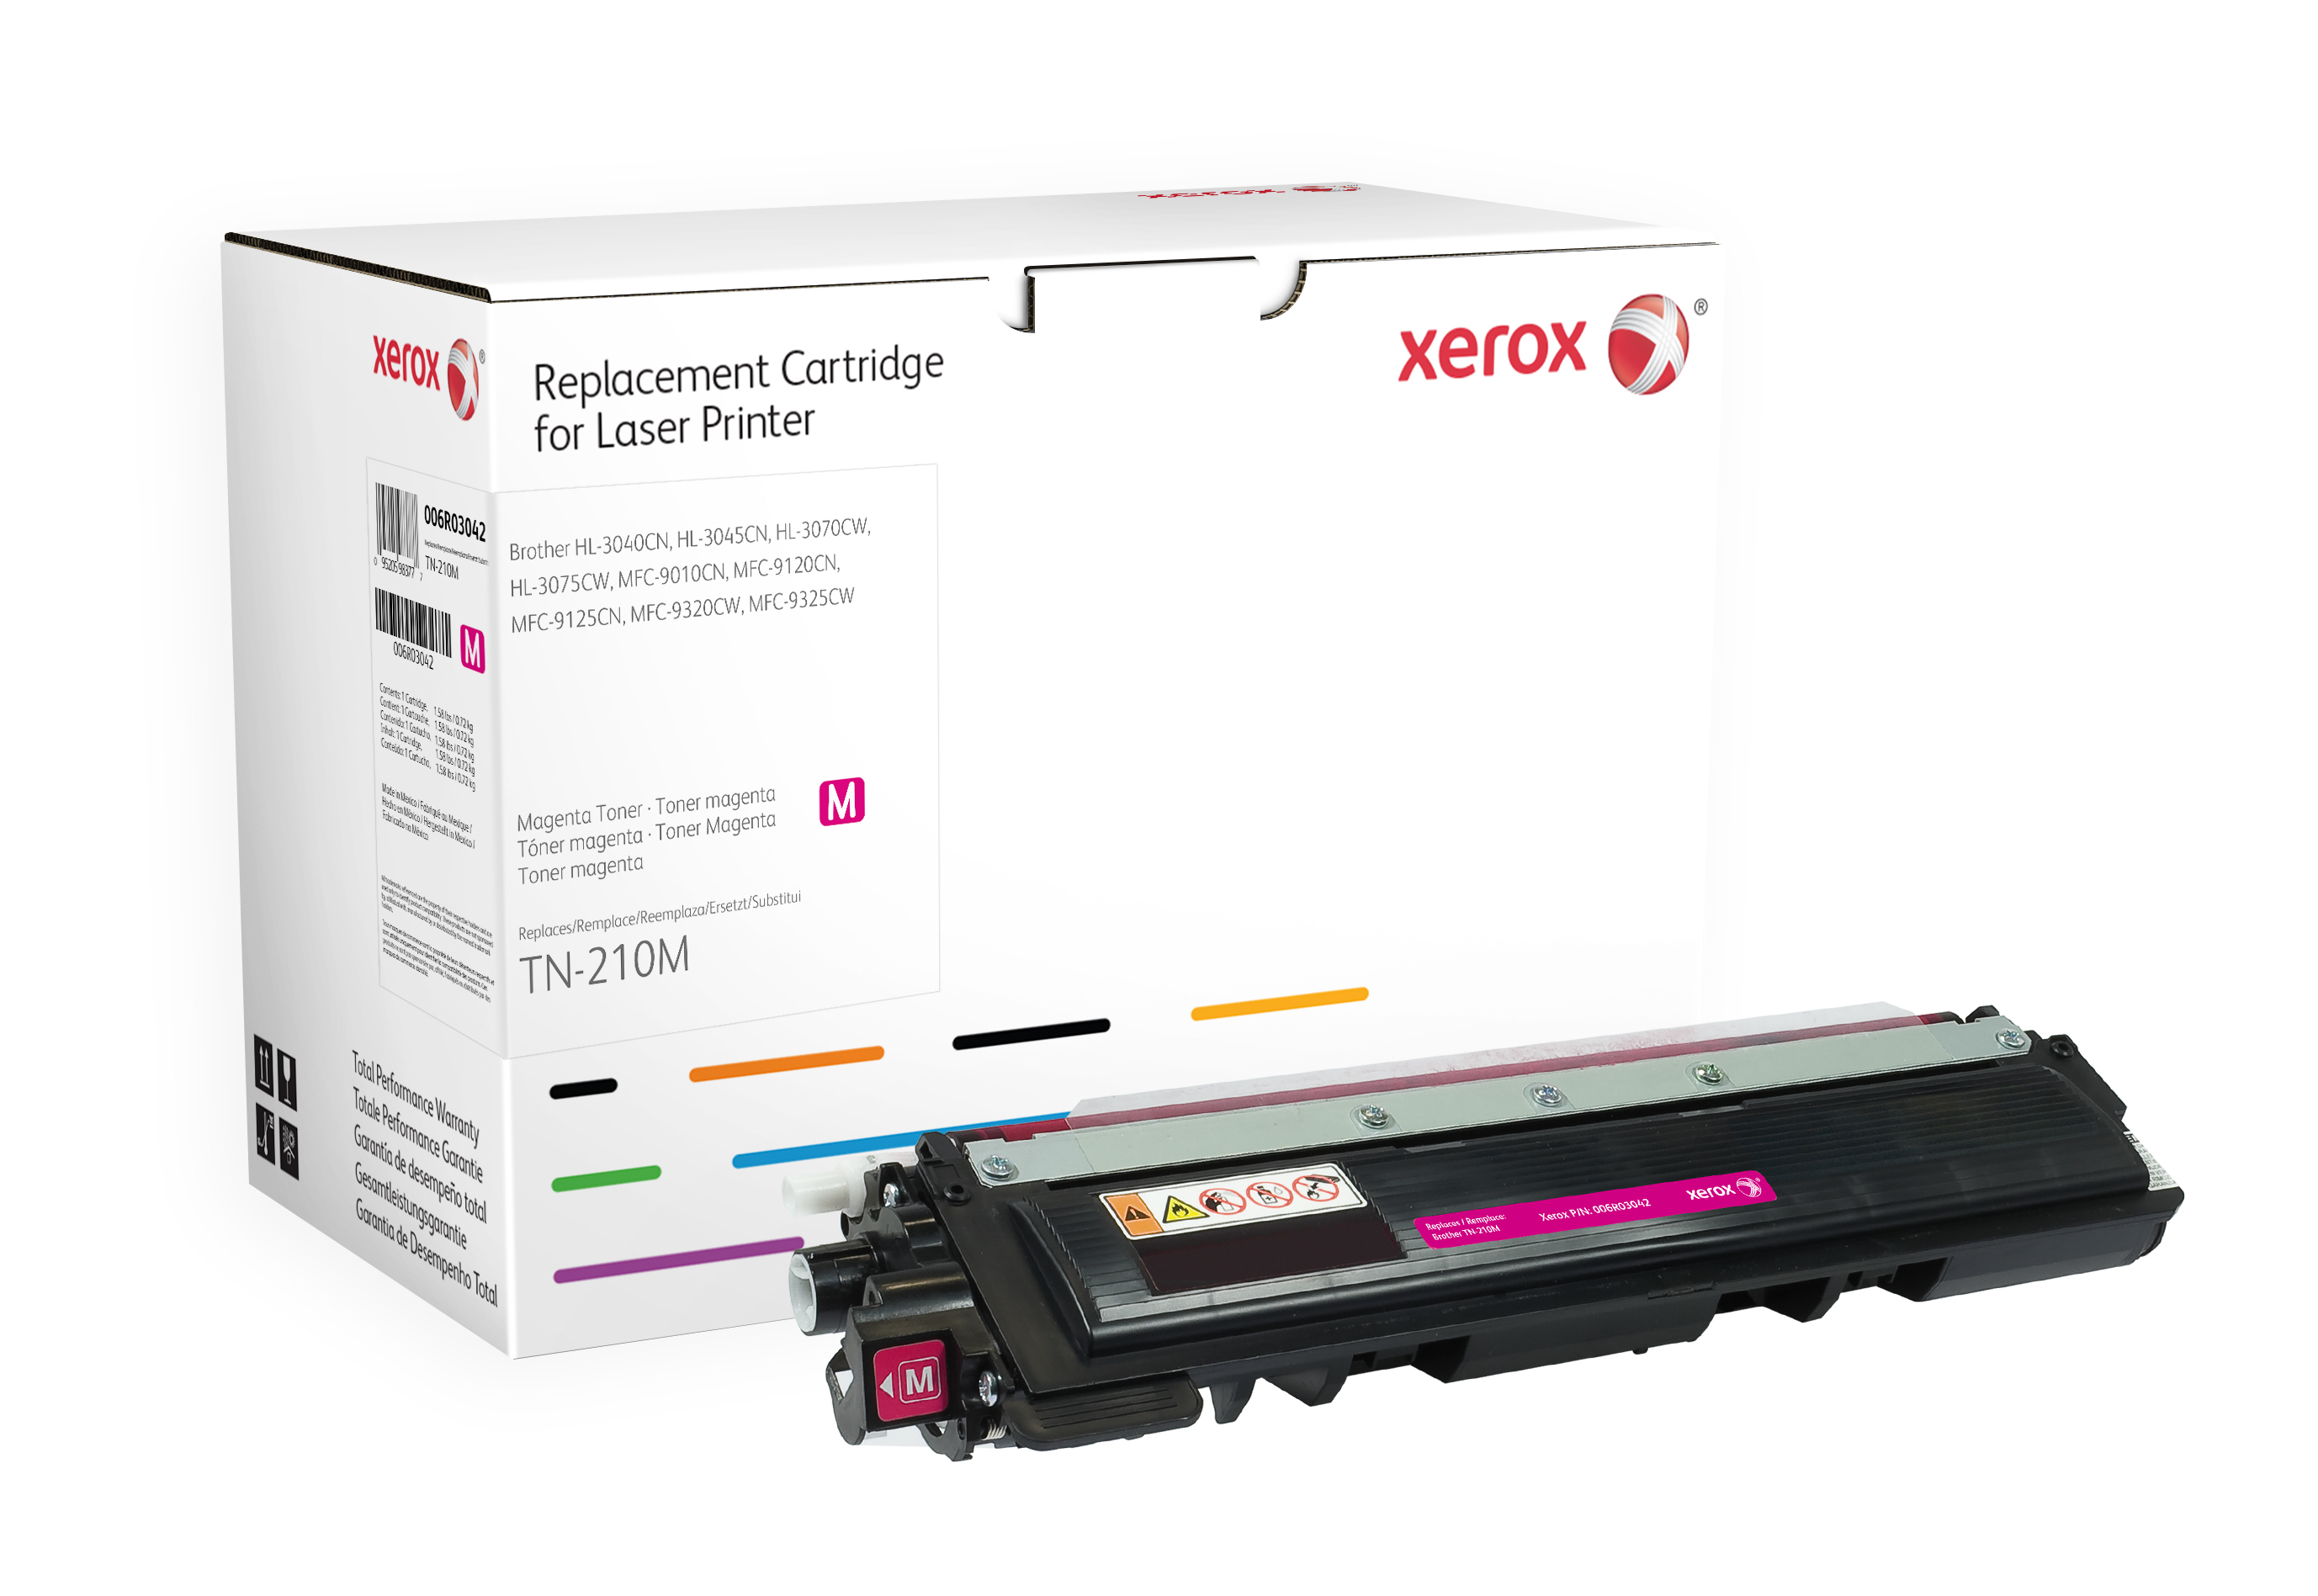 Xerox 006R03042 - ersetzt TN-230M - Toner magenta - fr DCP-9010CN, HL-3040CN/HL-3070CW, MFC-9120CN, MFC-9320W kompatibel